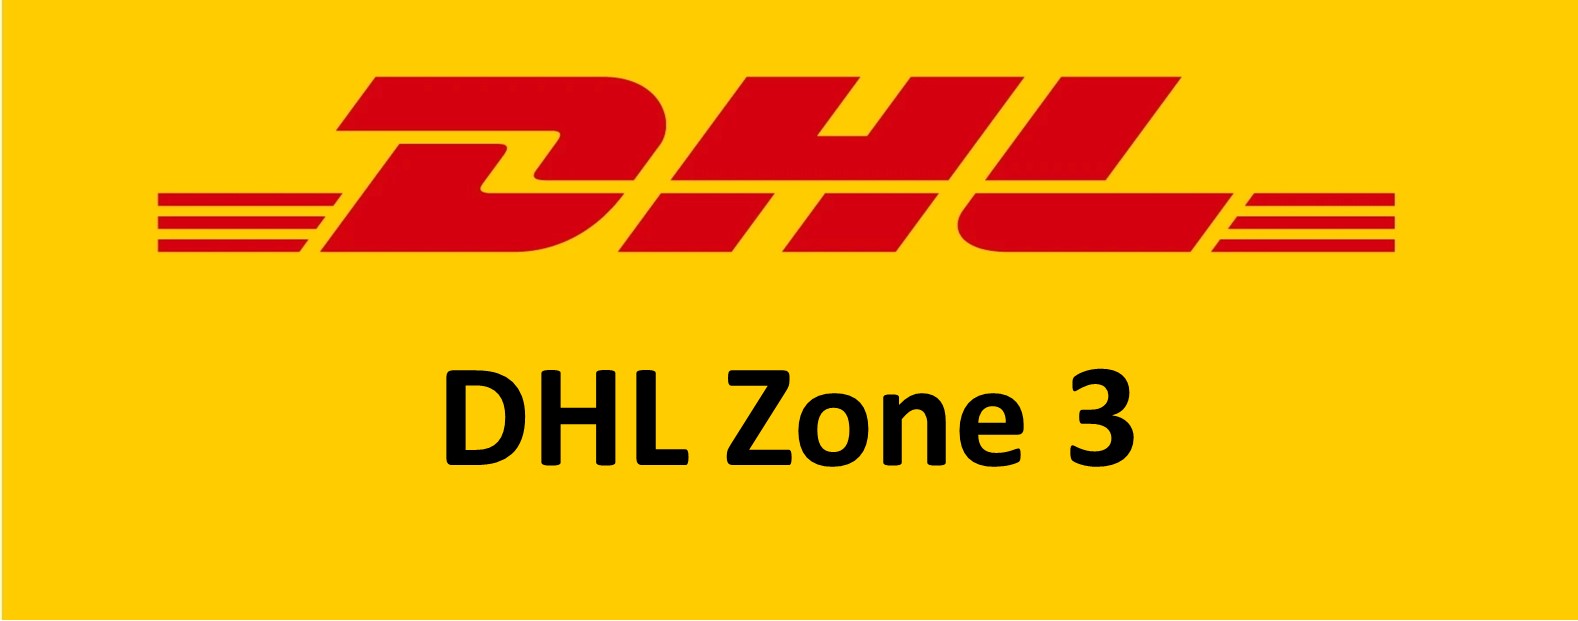 DHL Zone 3